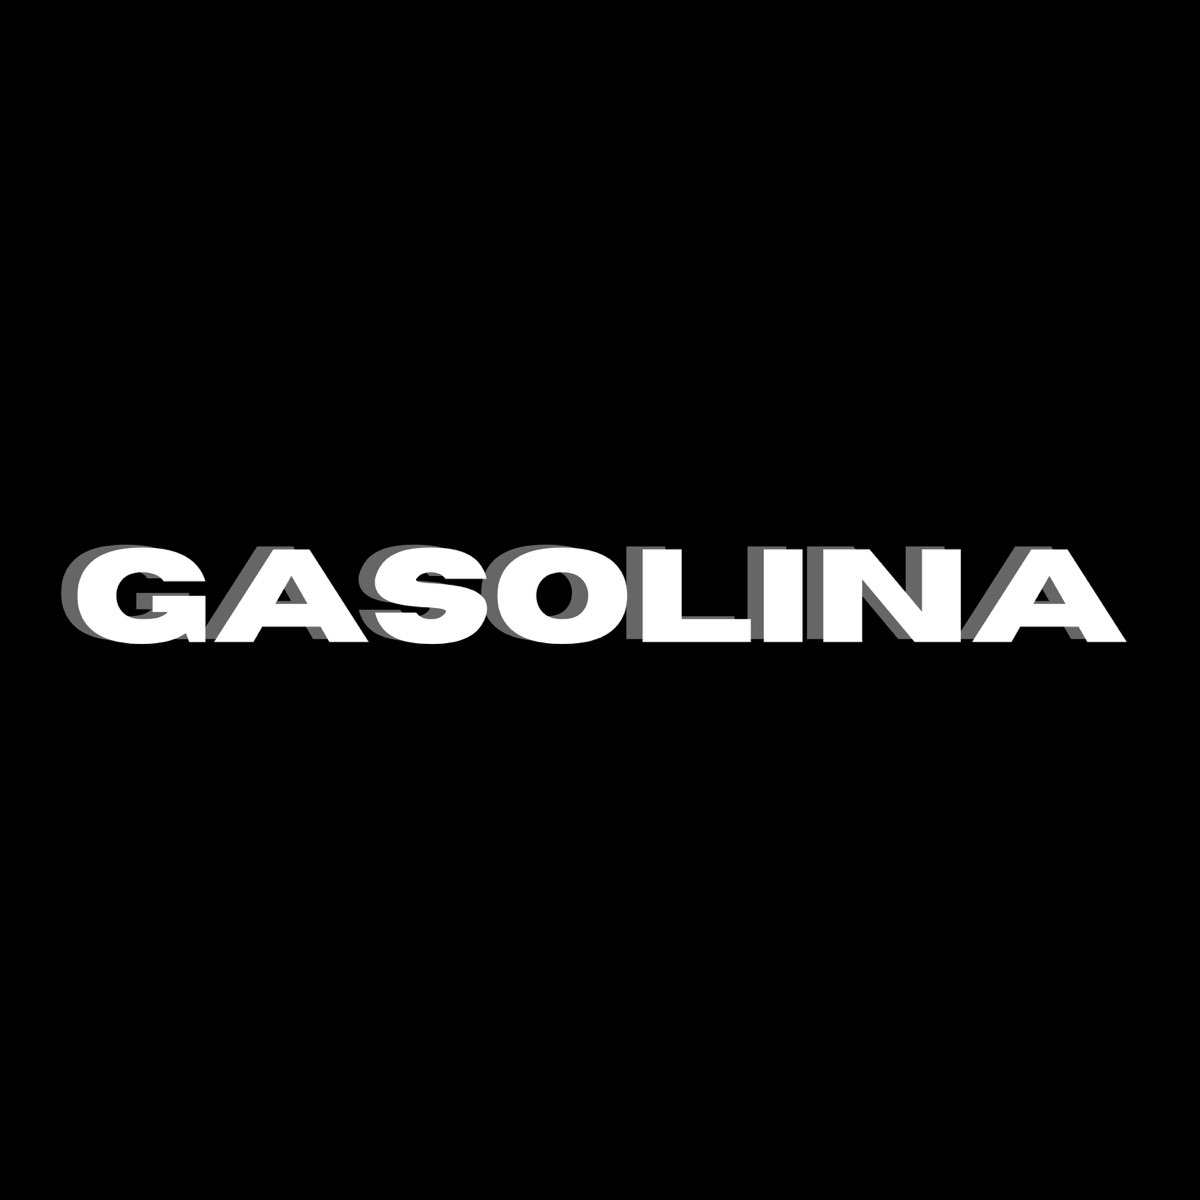 Daddy gasolina remix. Газолина Remix. Gasolina обложка. Gasolina песня.